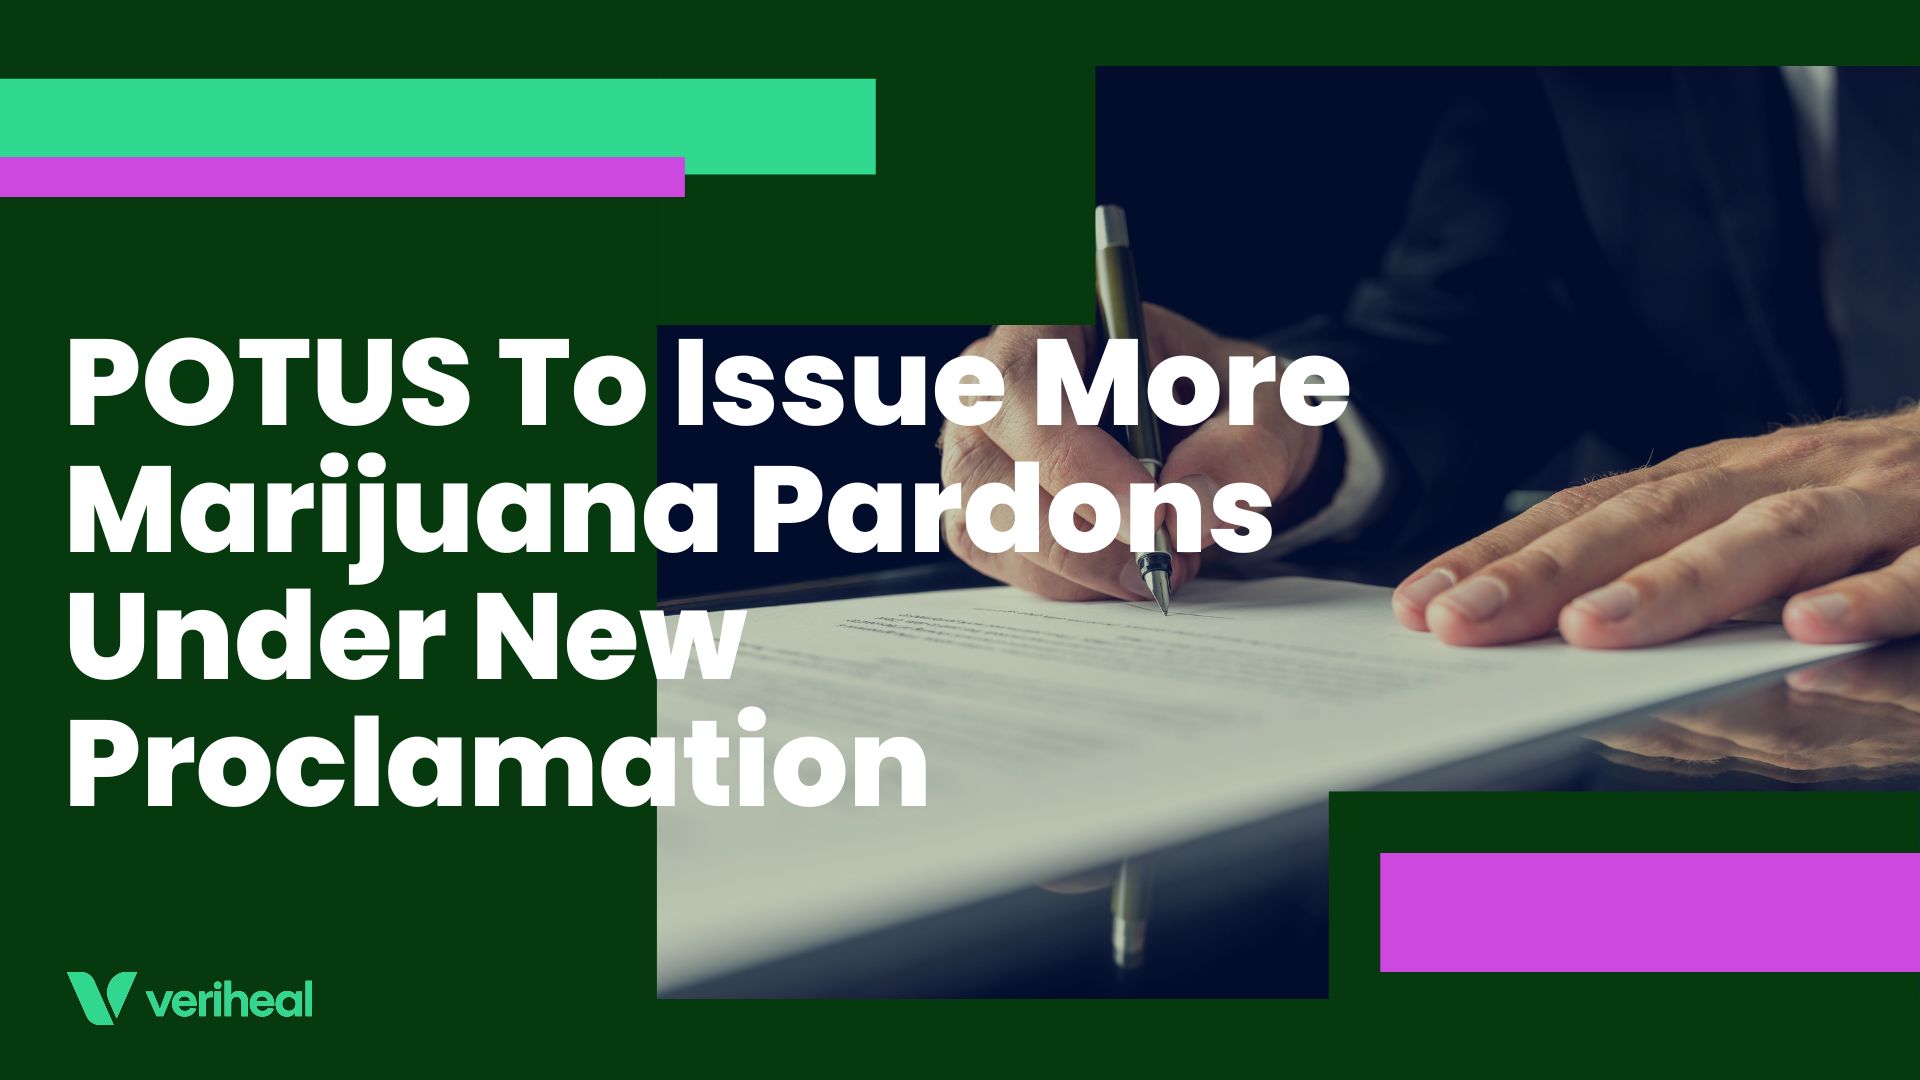 POTUS To Issue More Marijuana Pardons Under New Proclamation